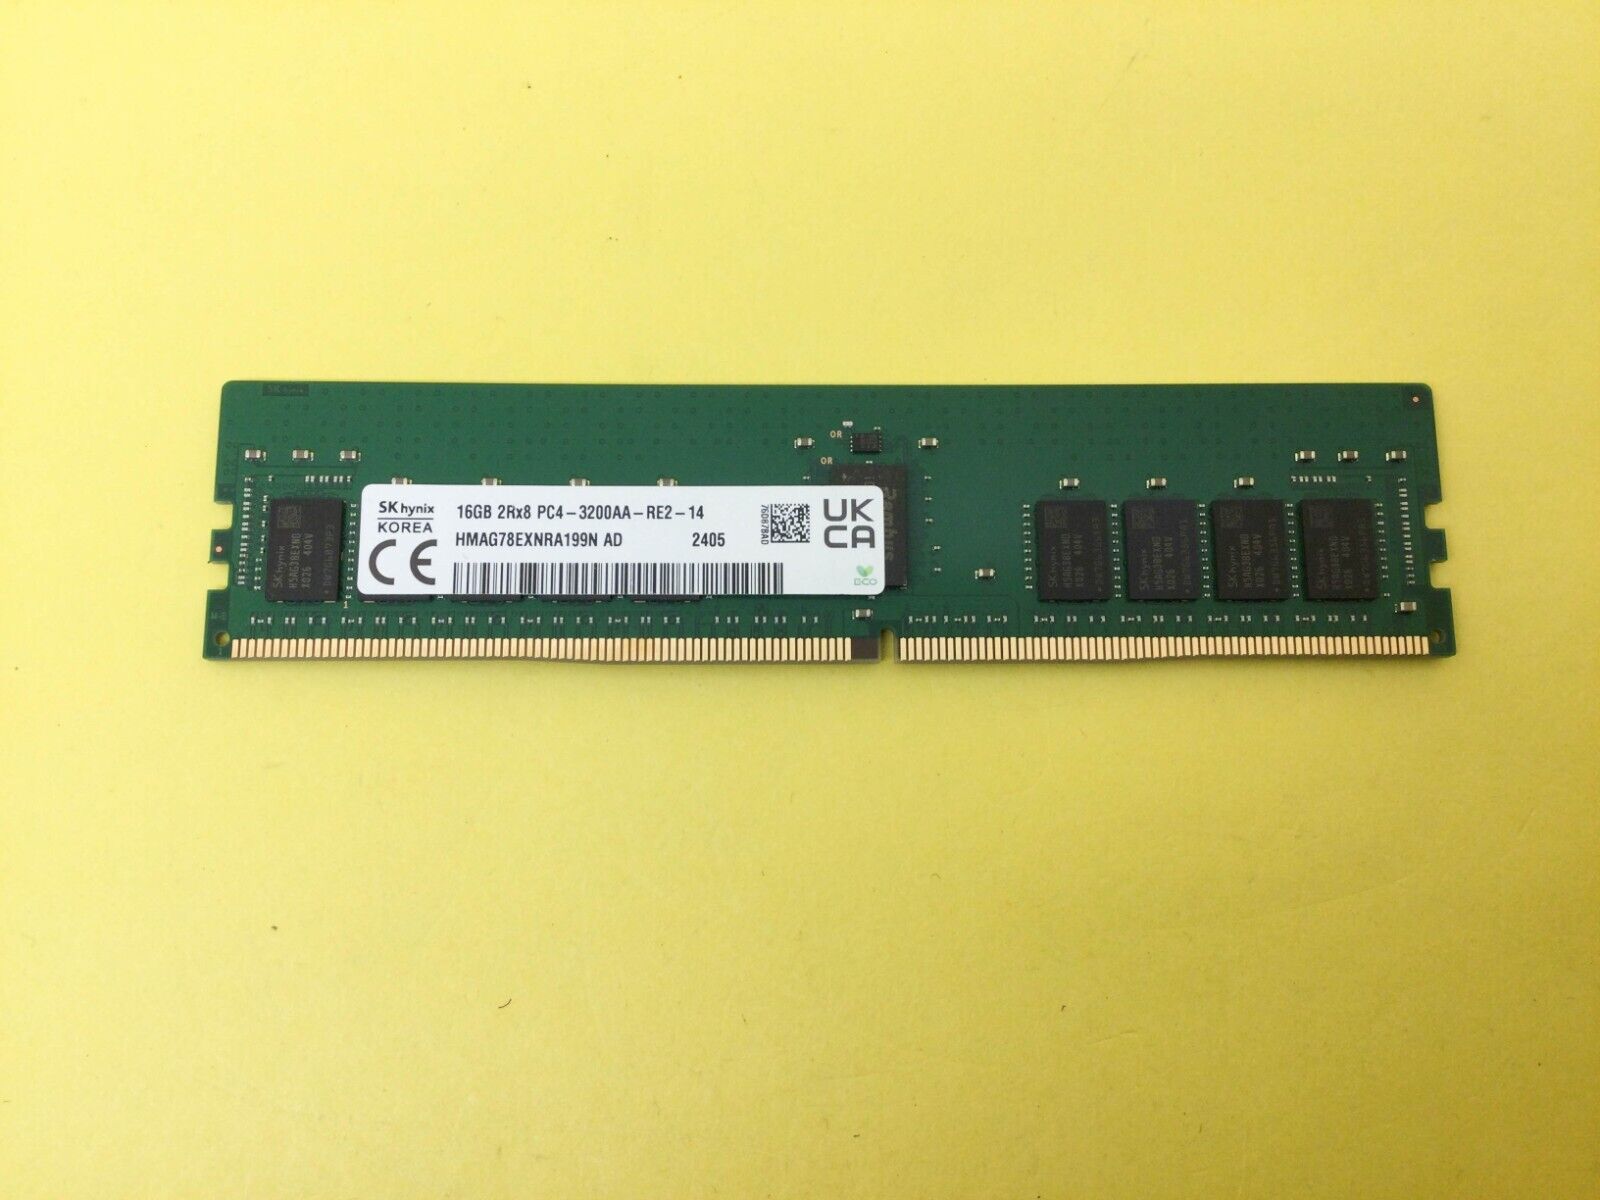 SK Hynix 16GB (1x16GB) 2RX8 PC4-3200AA Server Memory HMAG78EXNRA199N